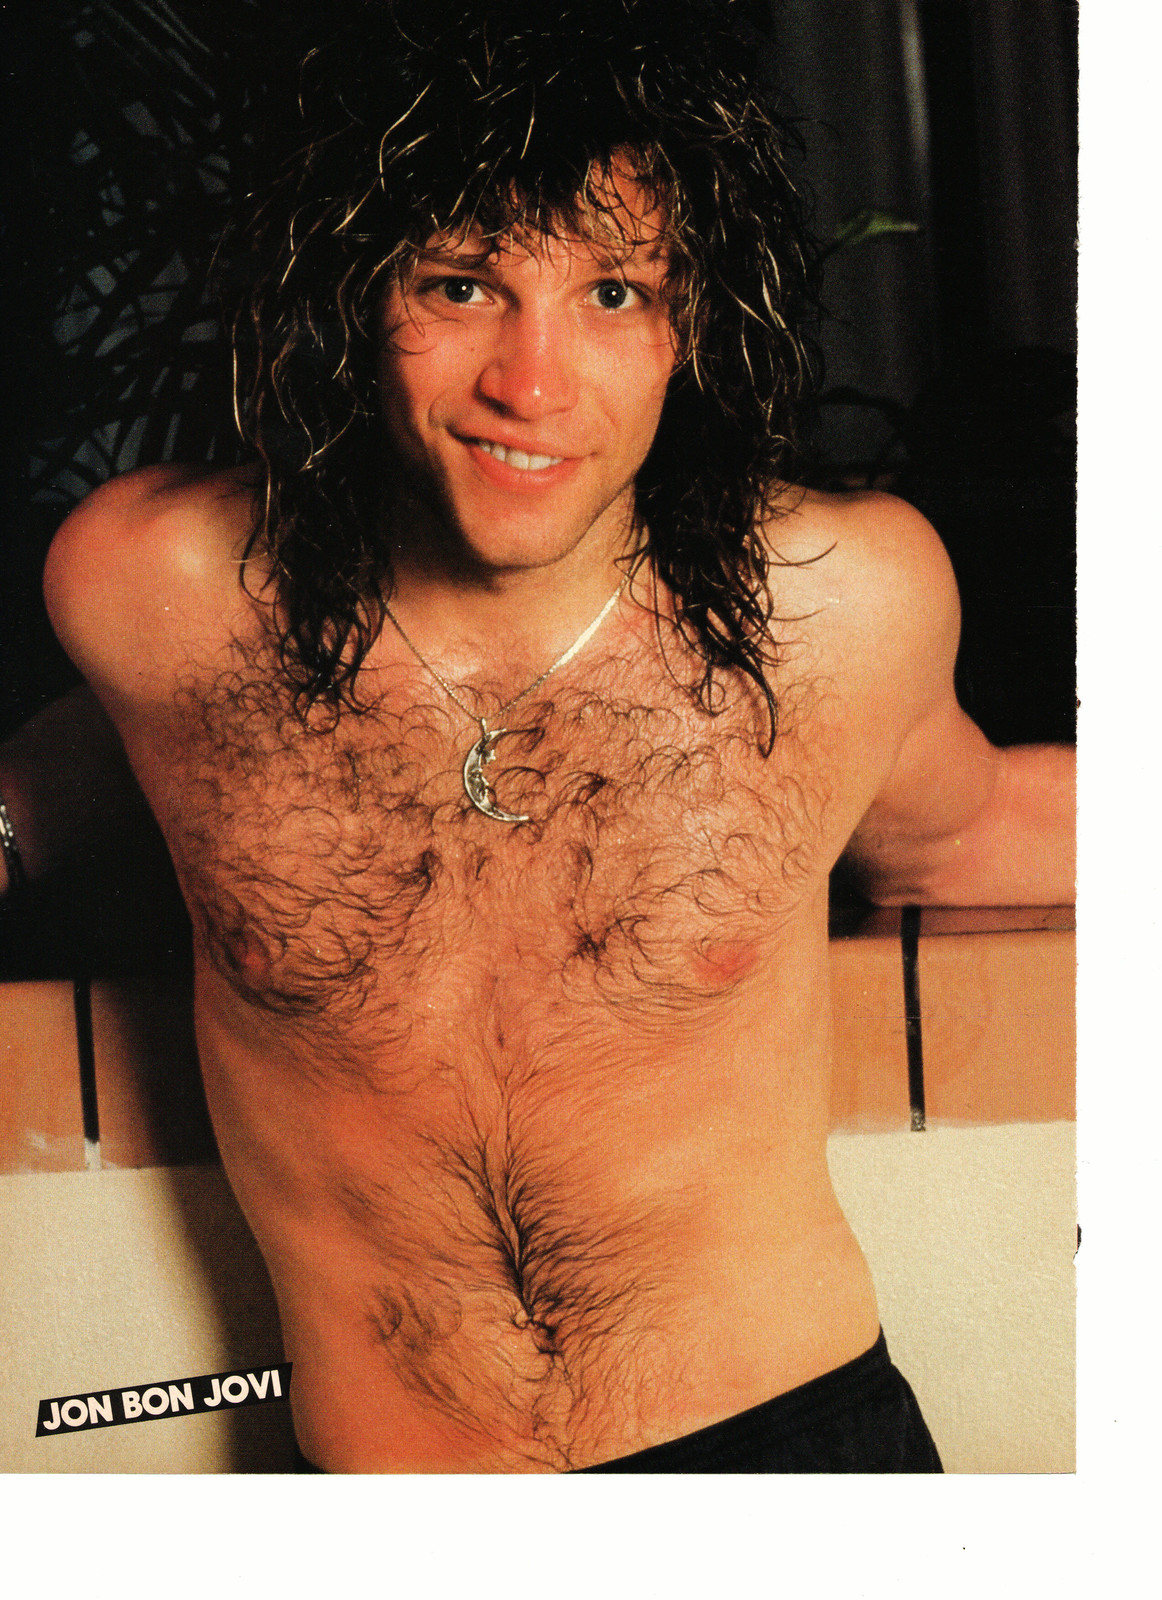 Jon Bon Jovi teen magazine pinup clipping shirtless in a hot tub necklace Rock - $3.50